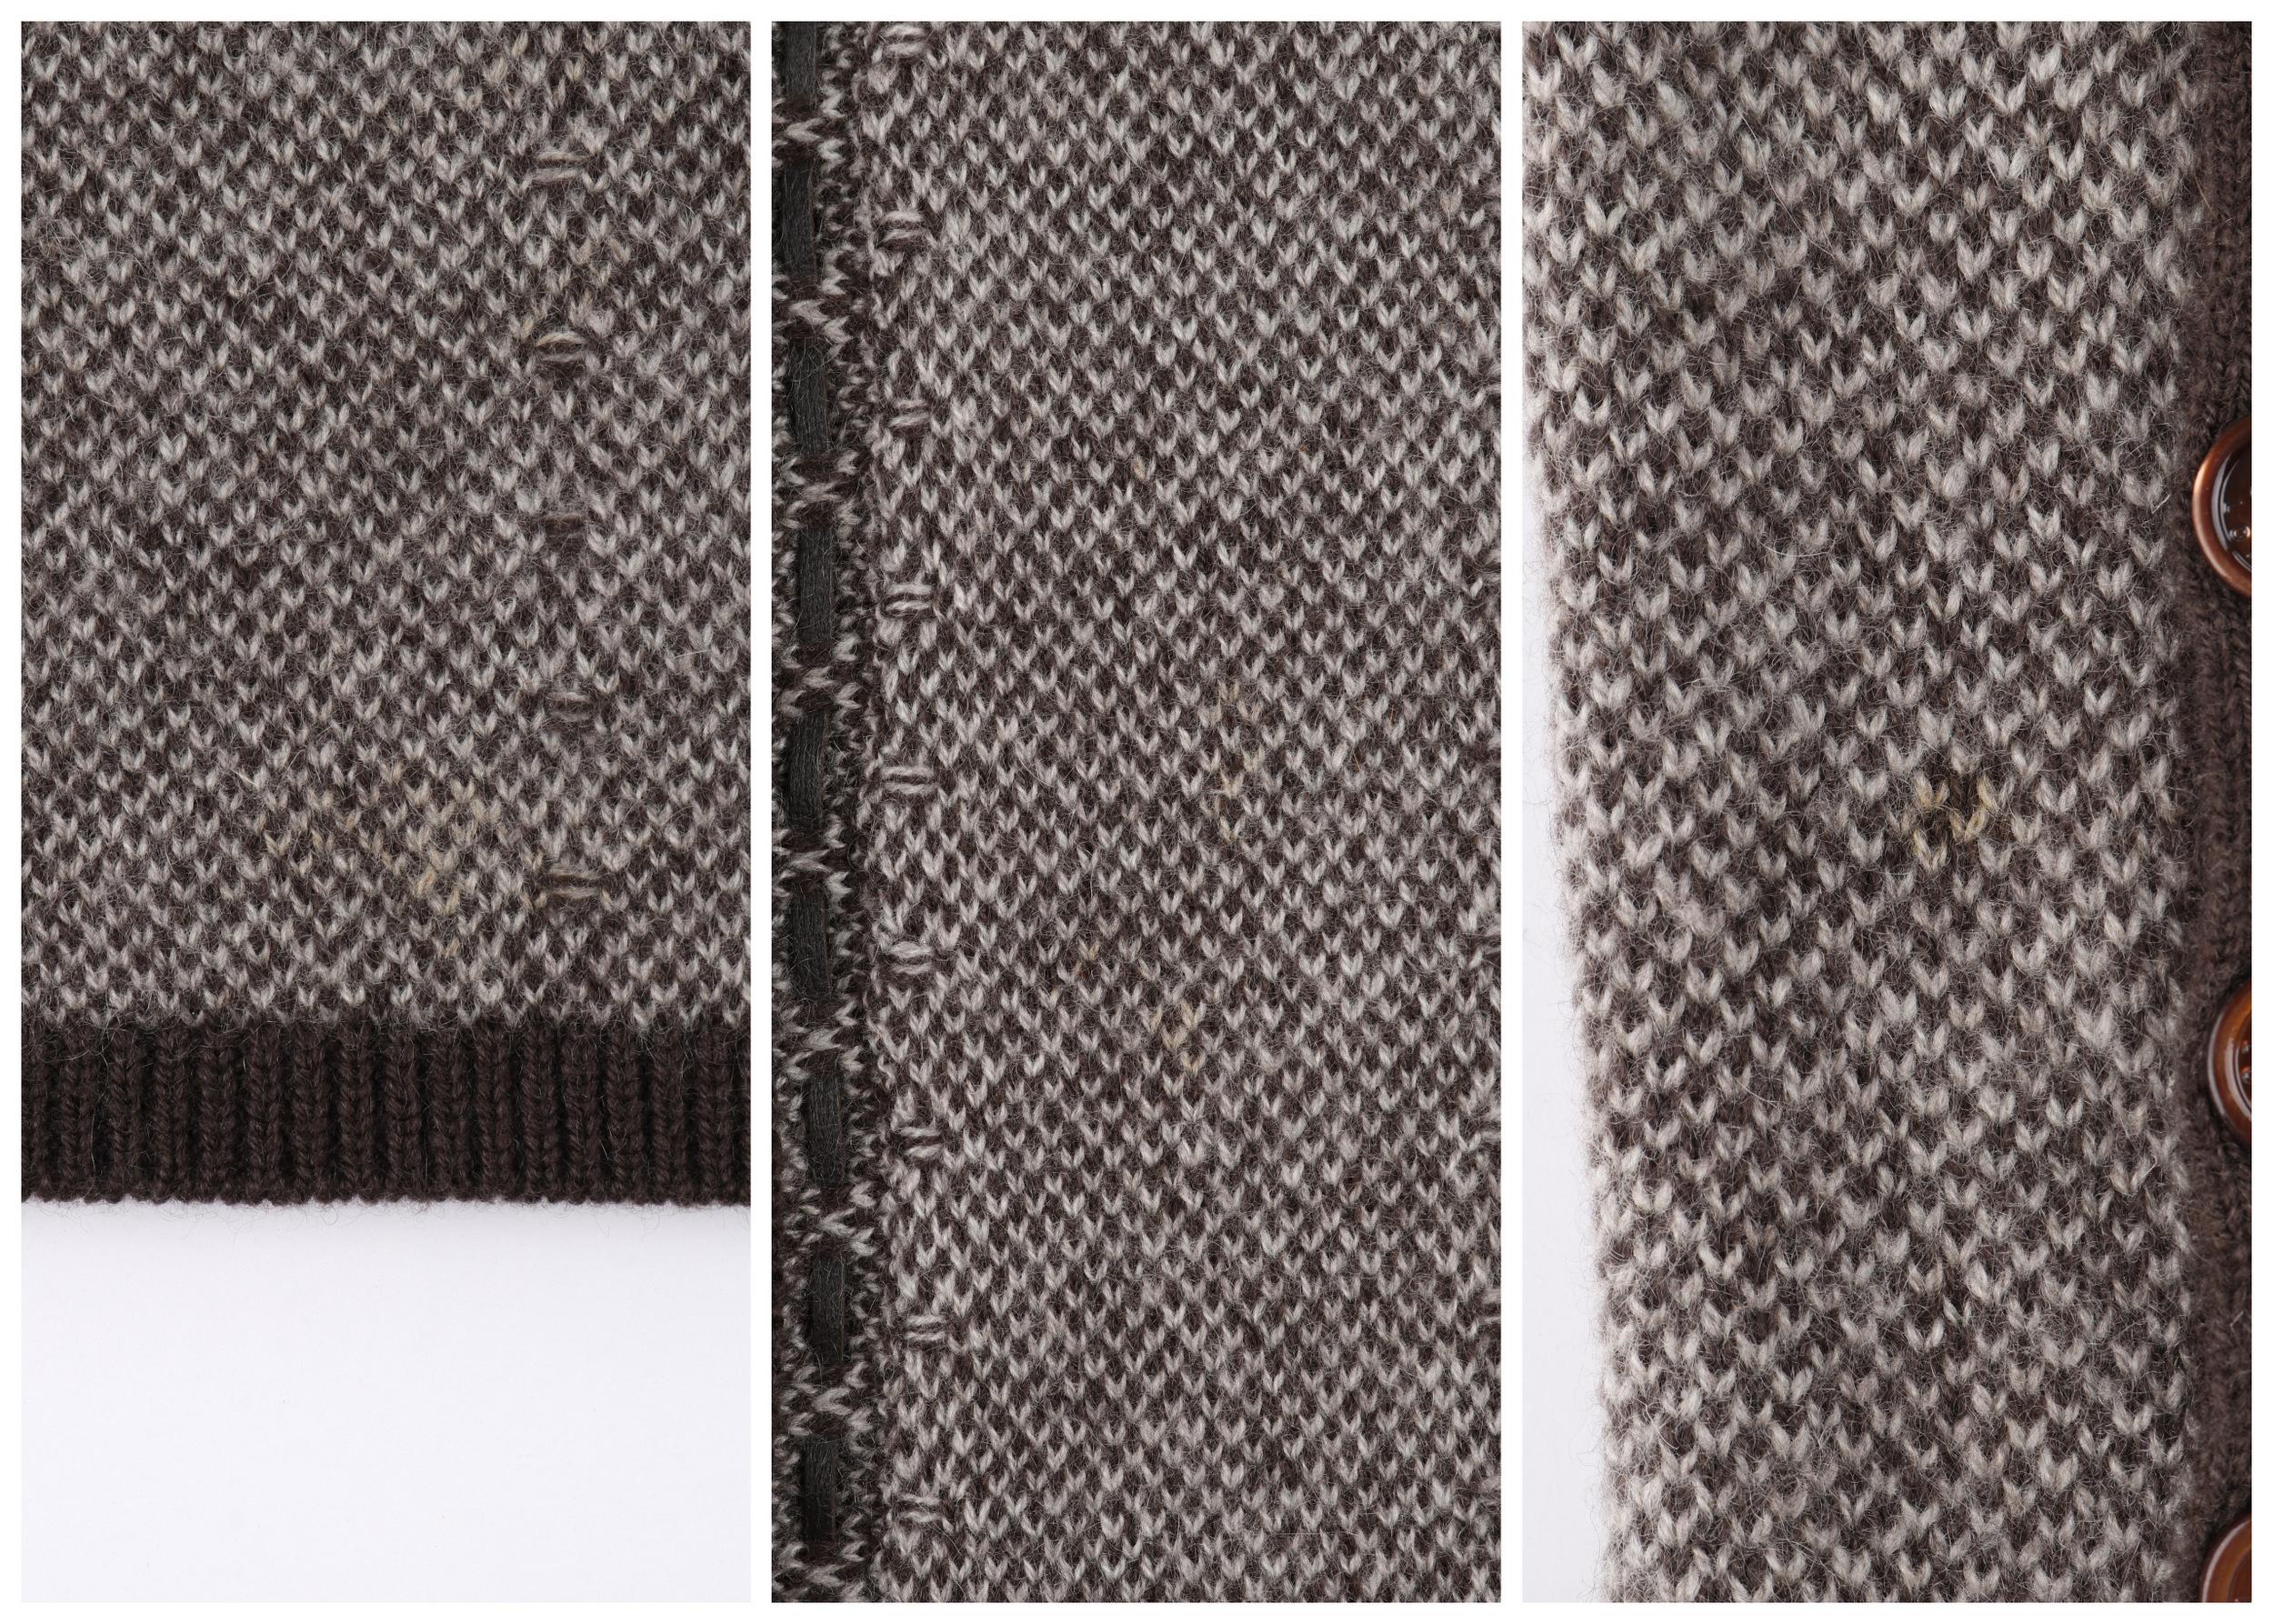 LORO PIANA Brown Cashmere Leather Tweed Knit Cardigan Dress Sweater Twin Set 44 4